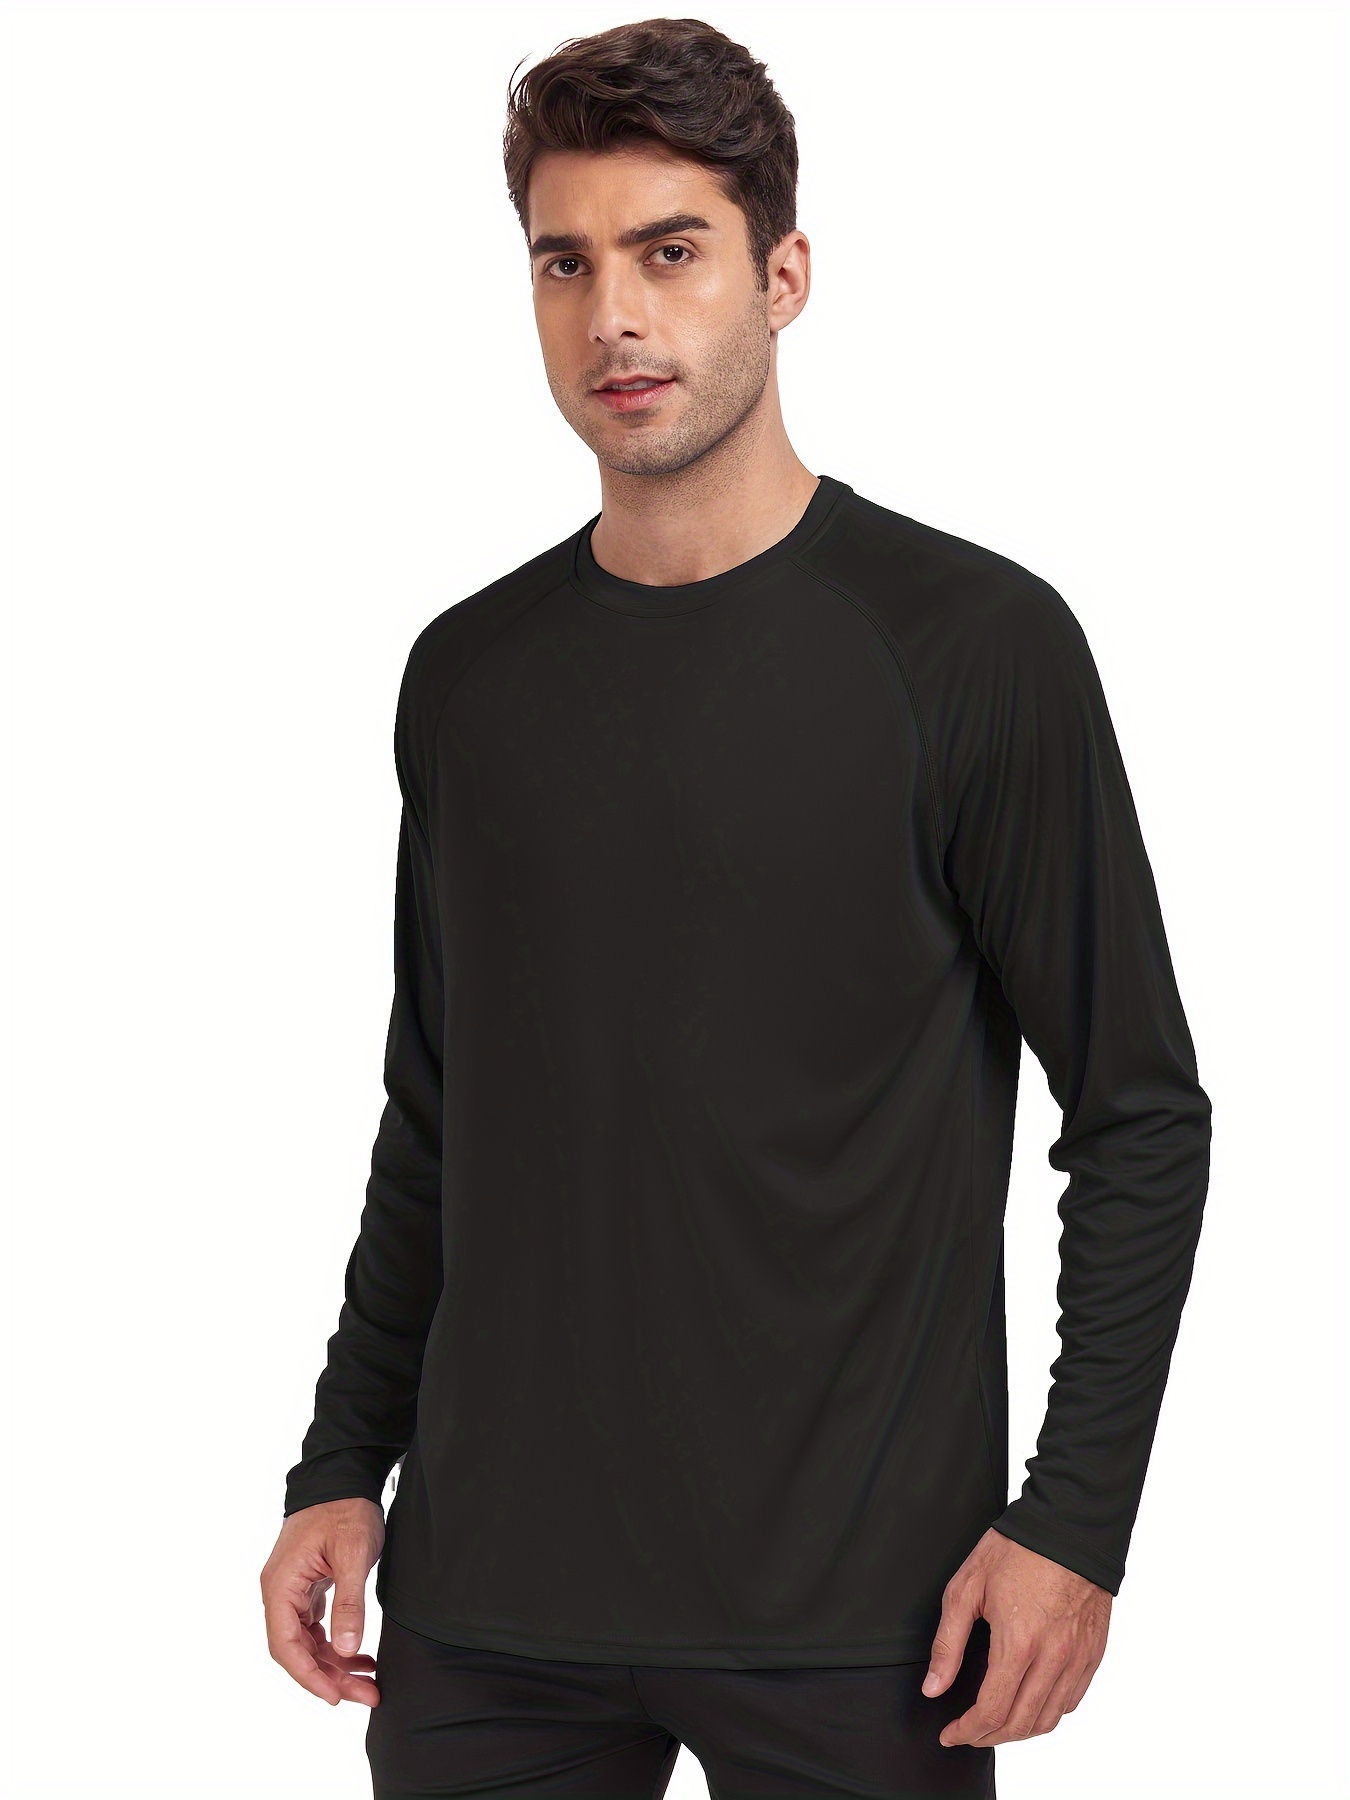 Men's Tactical Shirts Quick Dry UV Protection Breathable Long Sleeve Hiking Fishing Shirts, Black / 2XL